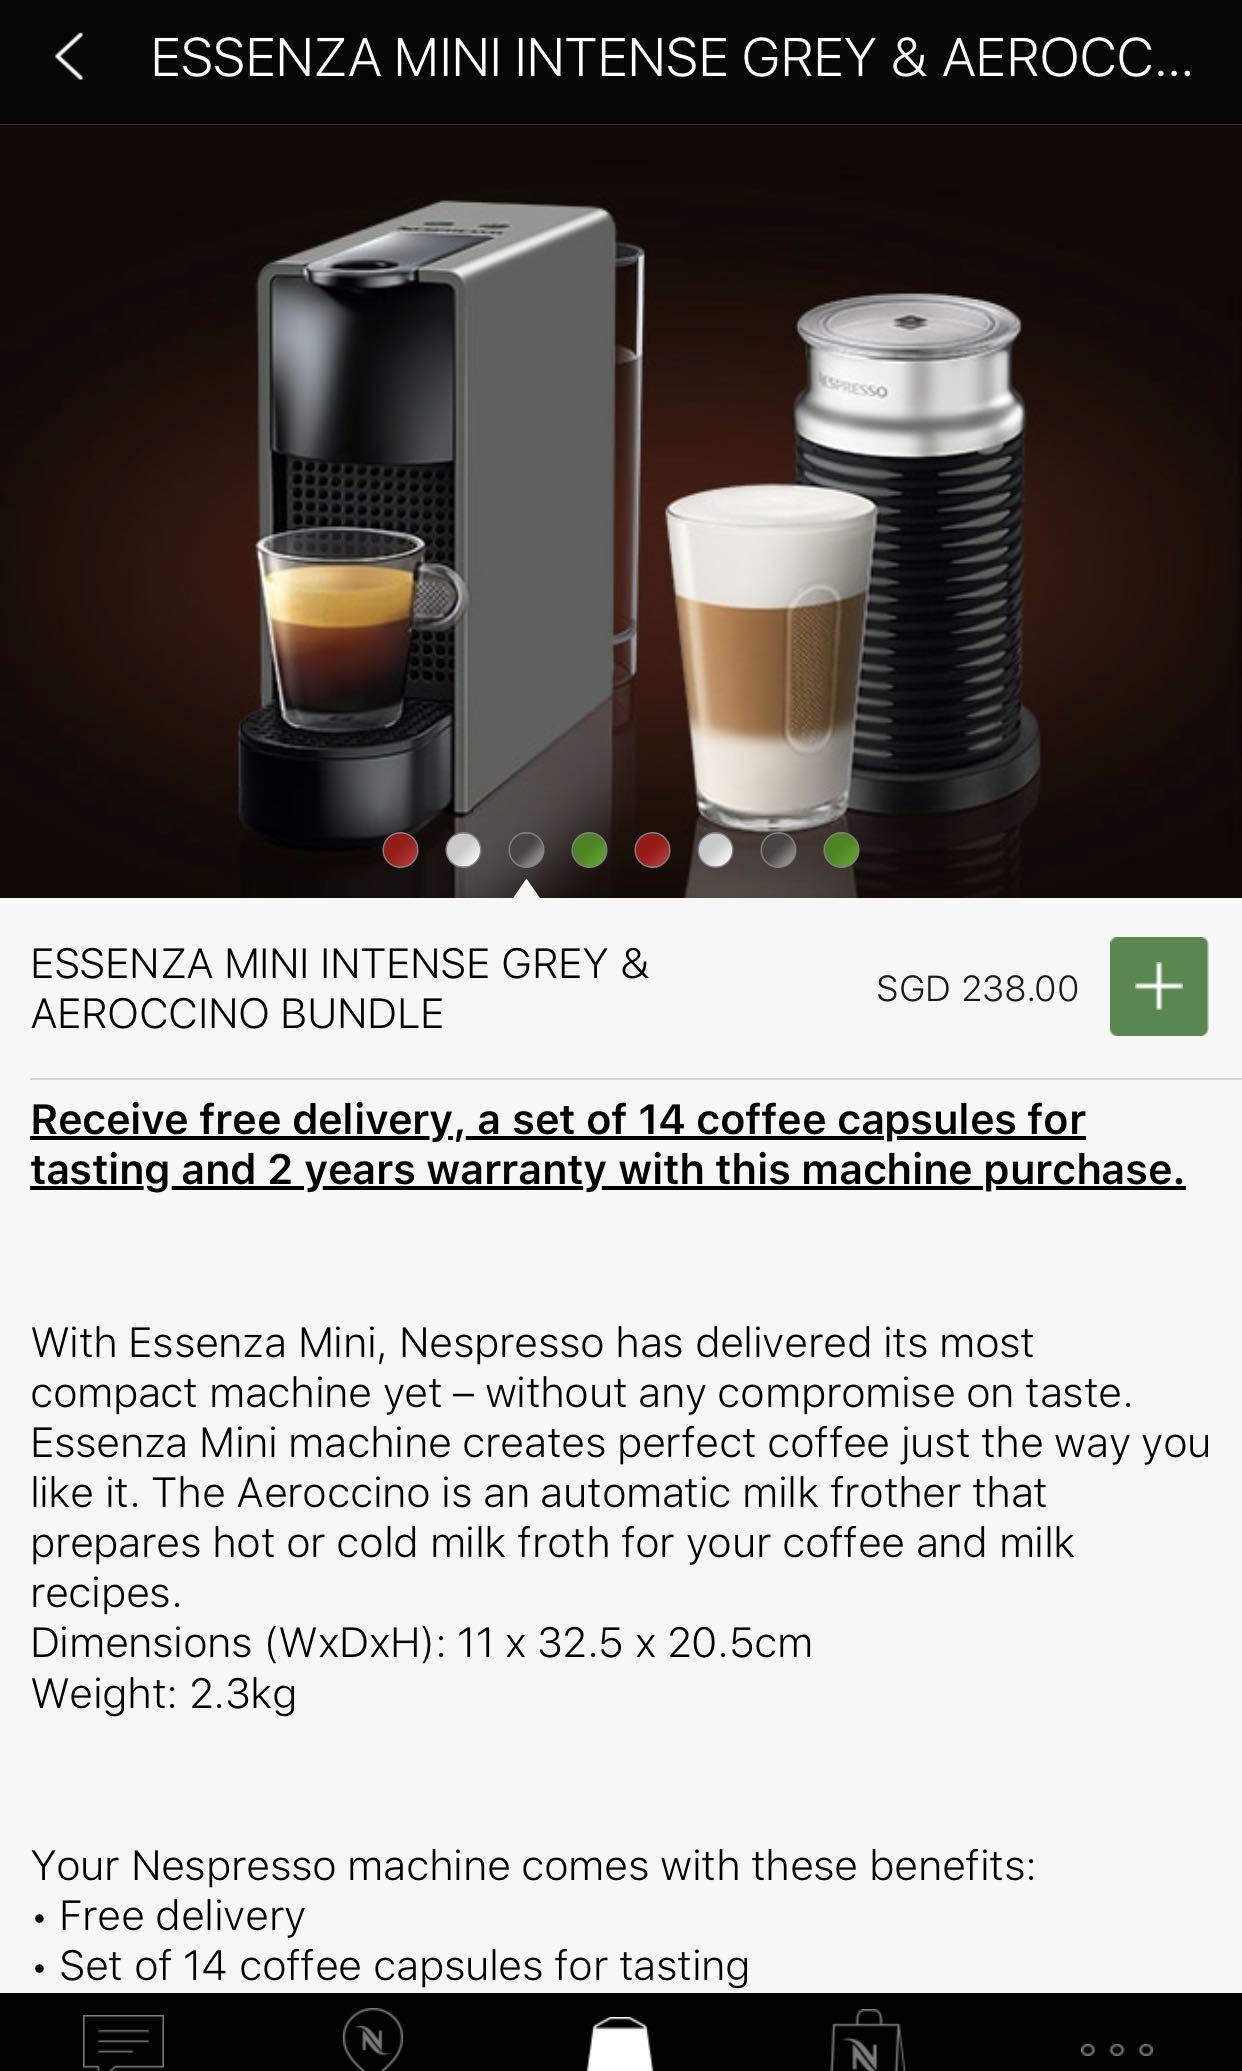 https://media.karousell.com/media/photos/products/2020/6/11/brand_new__nespresso_essenza_m_1591860344_7728cd96_progressive.jpg